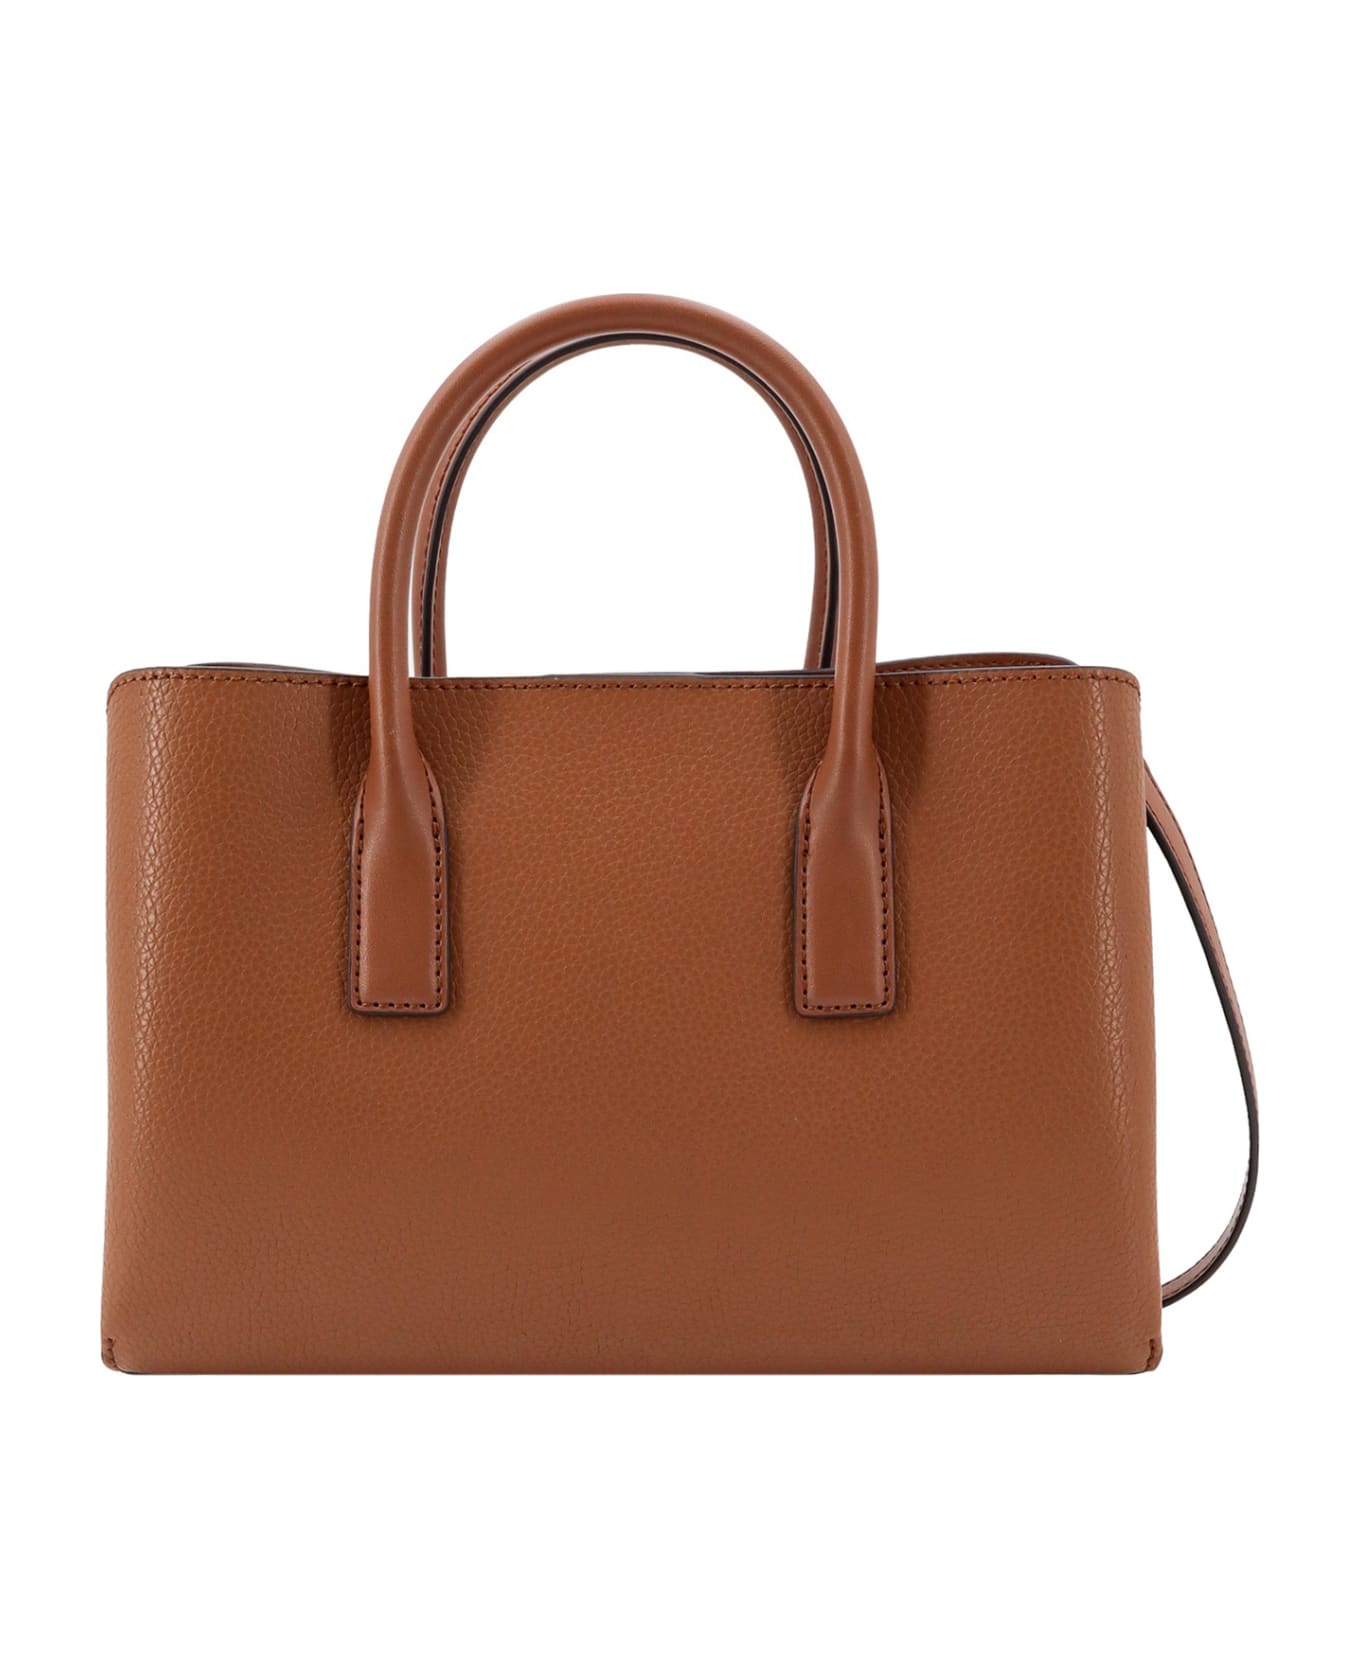 Michael Kors Ruthie Small Leather Handbag - Brown トートバッグ